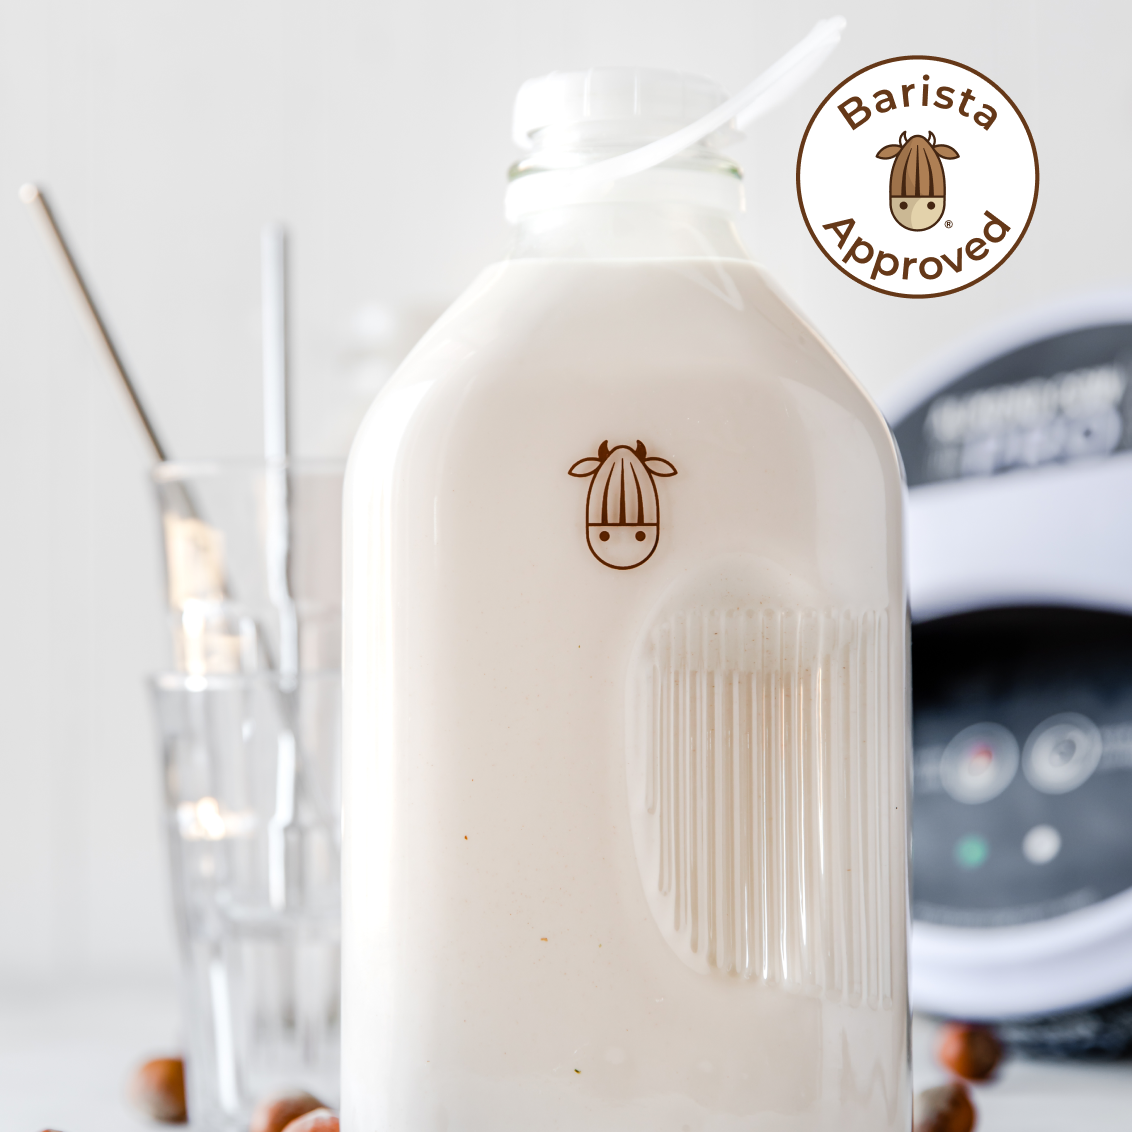 Pro Hazelnut Milk in a glass jug